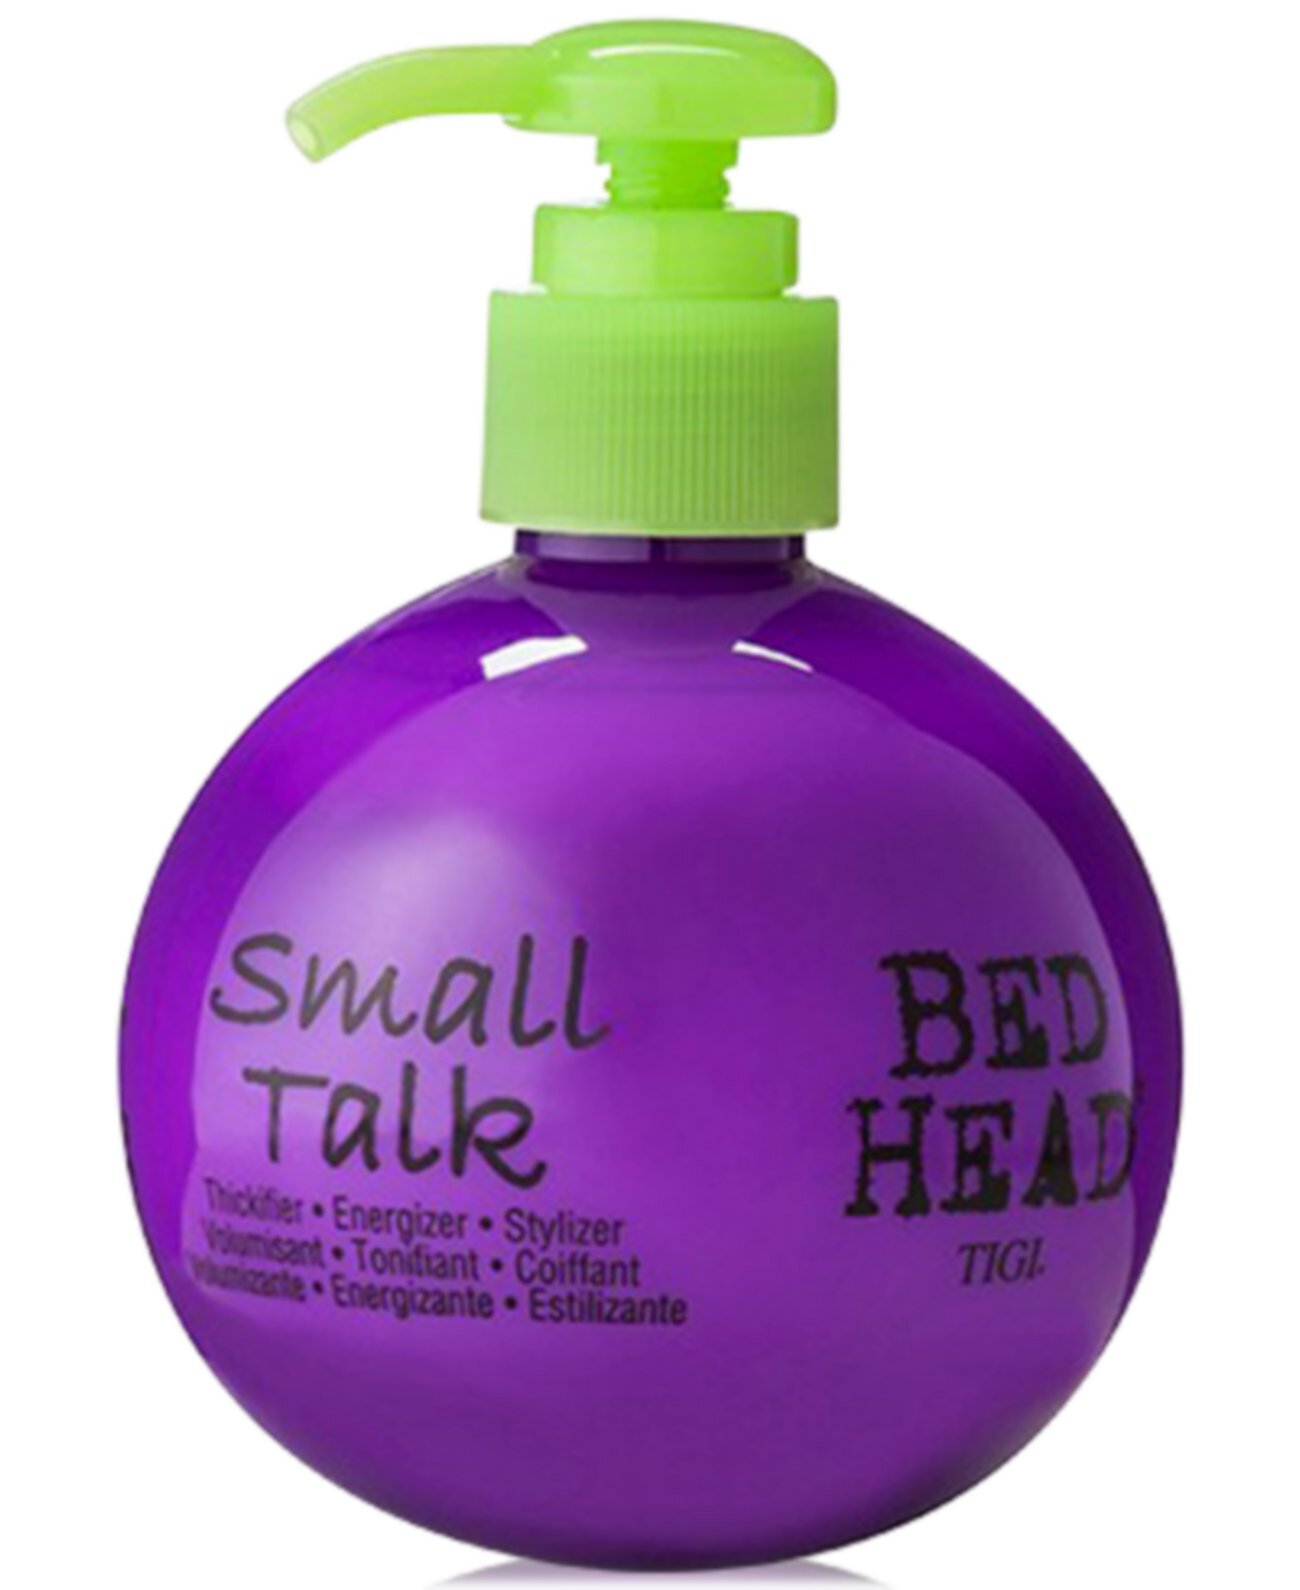 Bed Head Small Talk, 8 унций, от PUREBEAUTY Salon & Spa TIGI